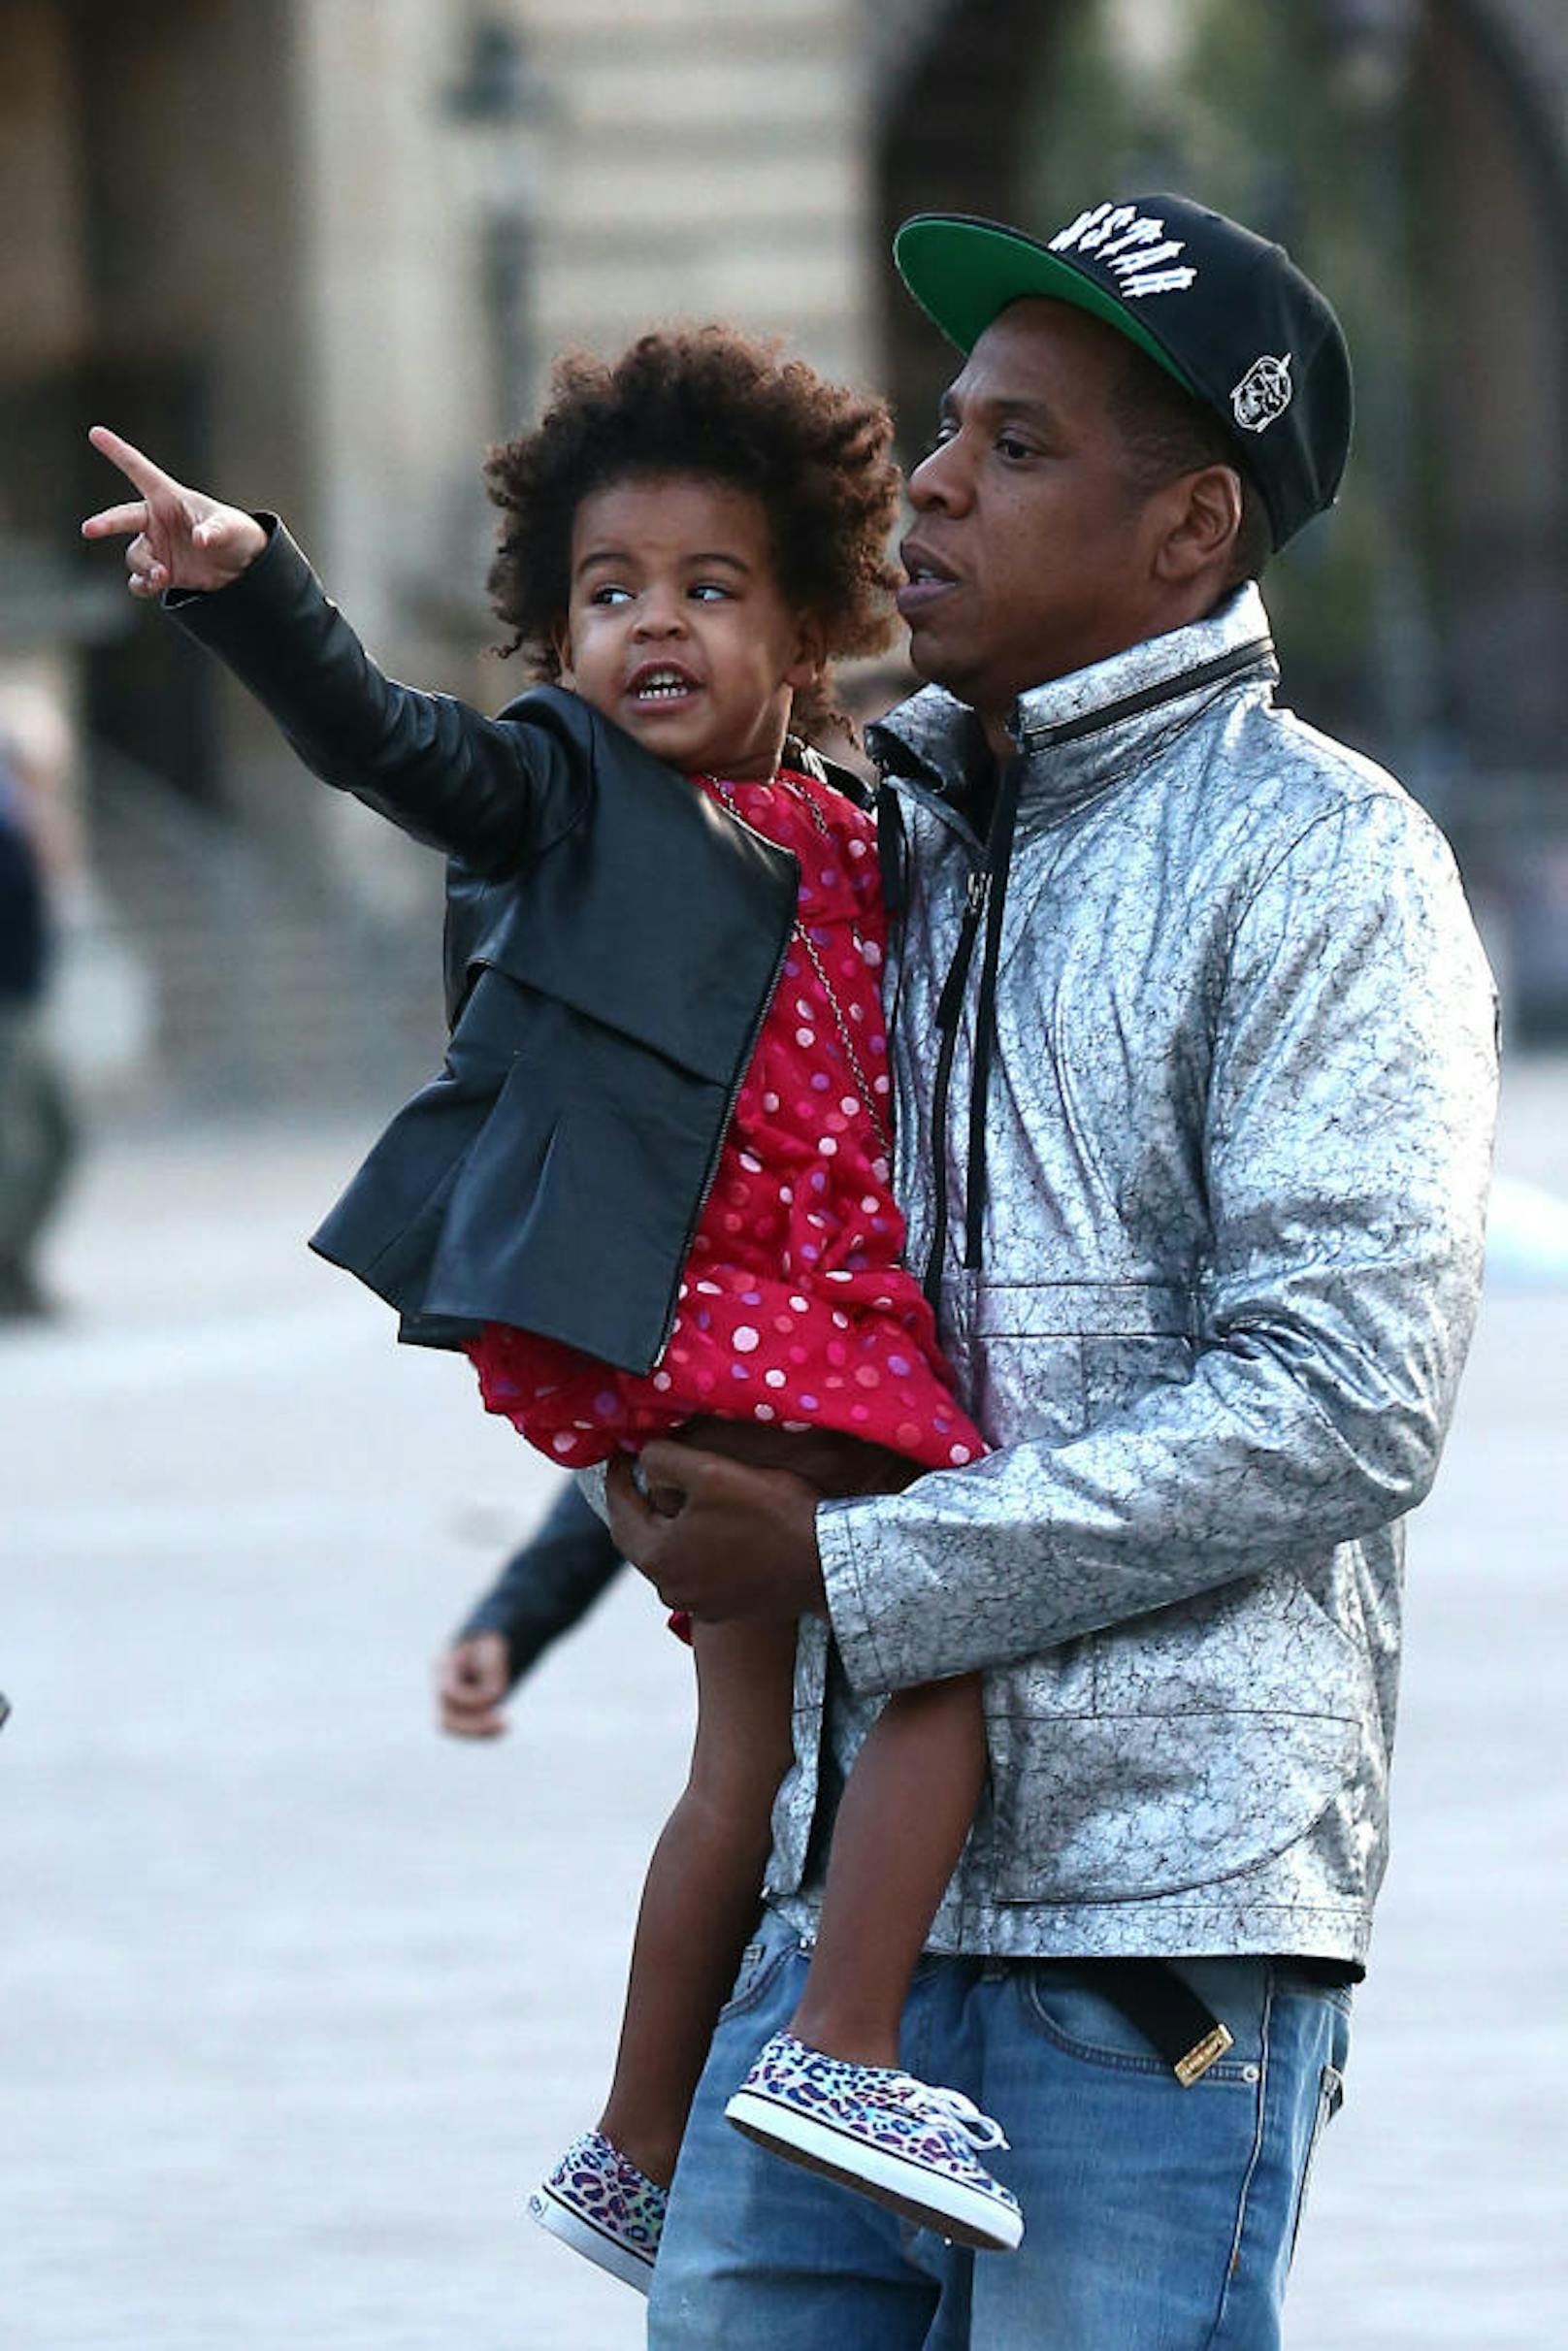 Jay Z mit seiner Tochter Blue Ivy vor dem Louvre in Paris am 7. Oktober 2014

PLEASE PIXALATE THE CHILDRENS FACE PRIOR TO THE PUBLICATION